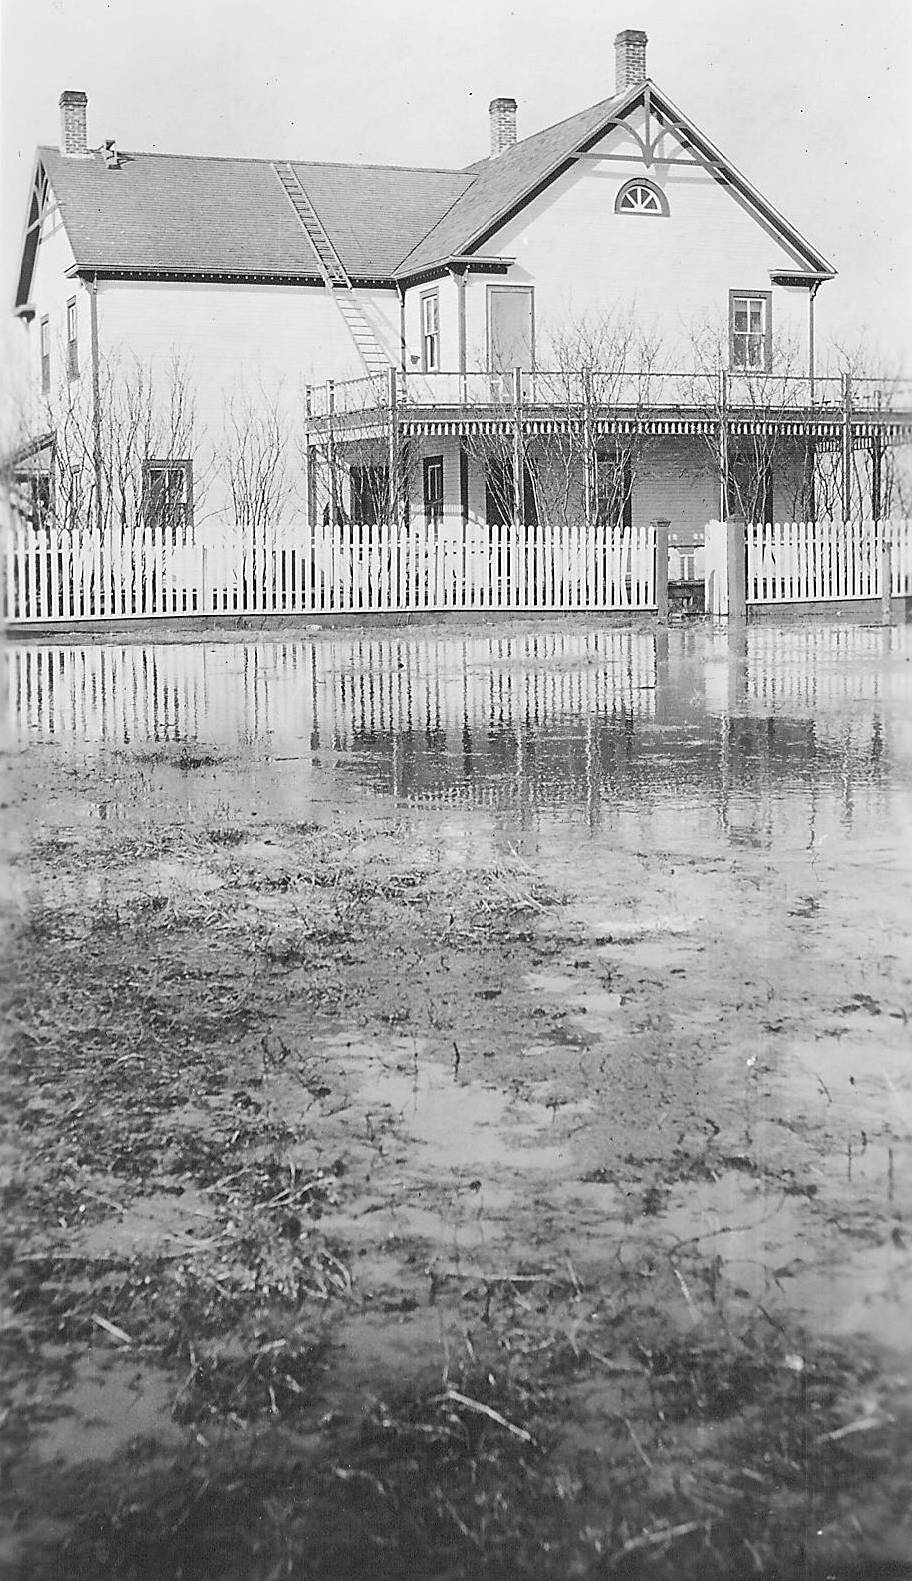 Old Bay House flooded 1934.
998.05.23.44 / Lamberton, Rev Hugh and Lillian 